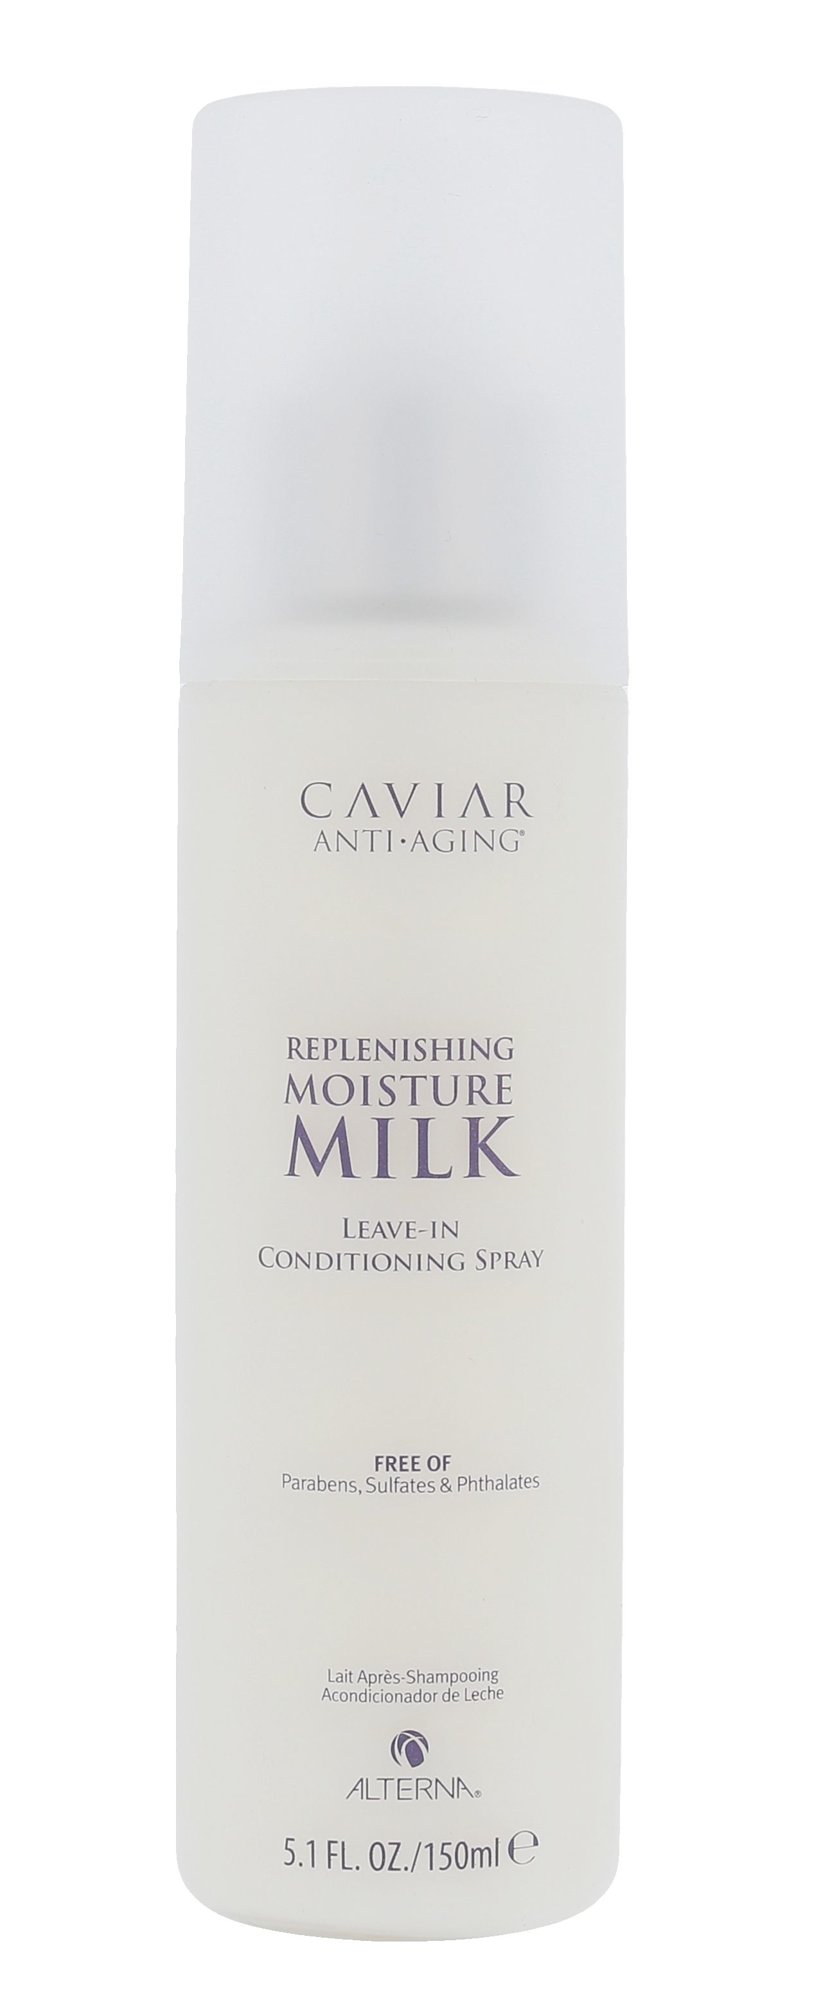 Alterna Caviar Moisture Milk Leave-In Conditioning Spray